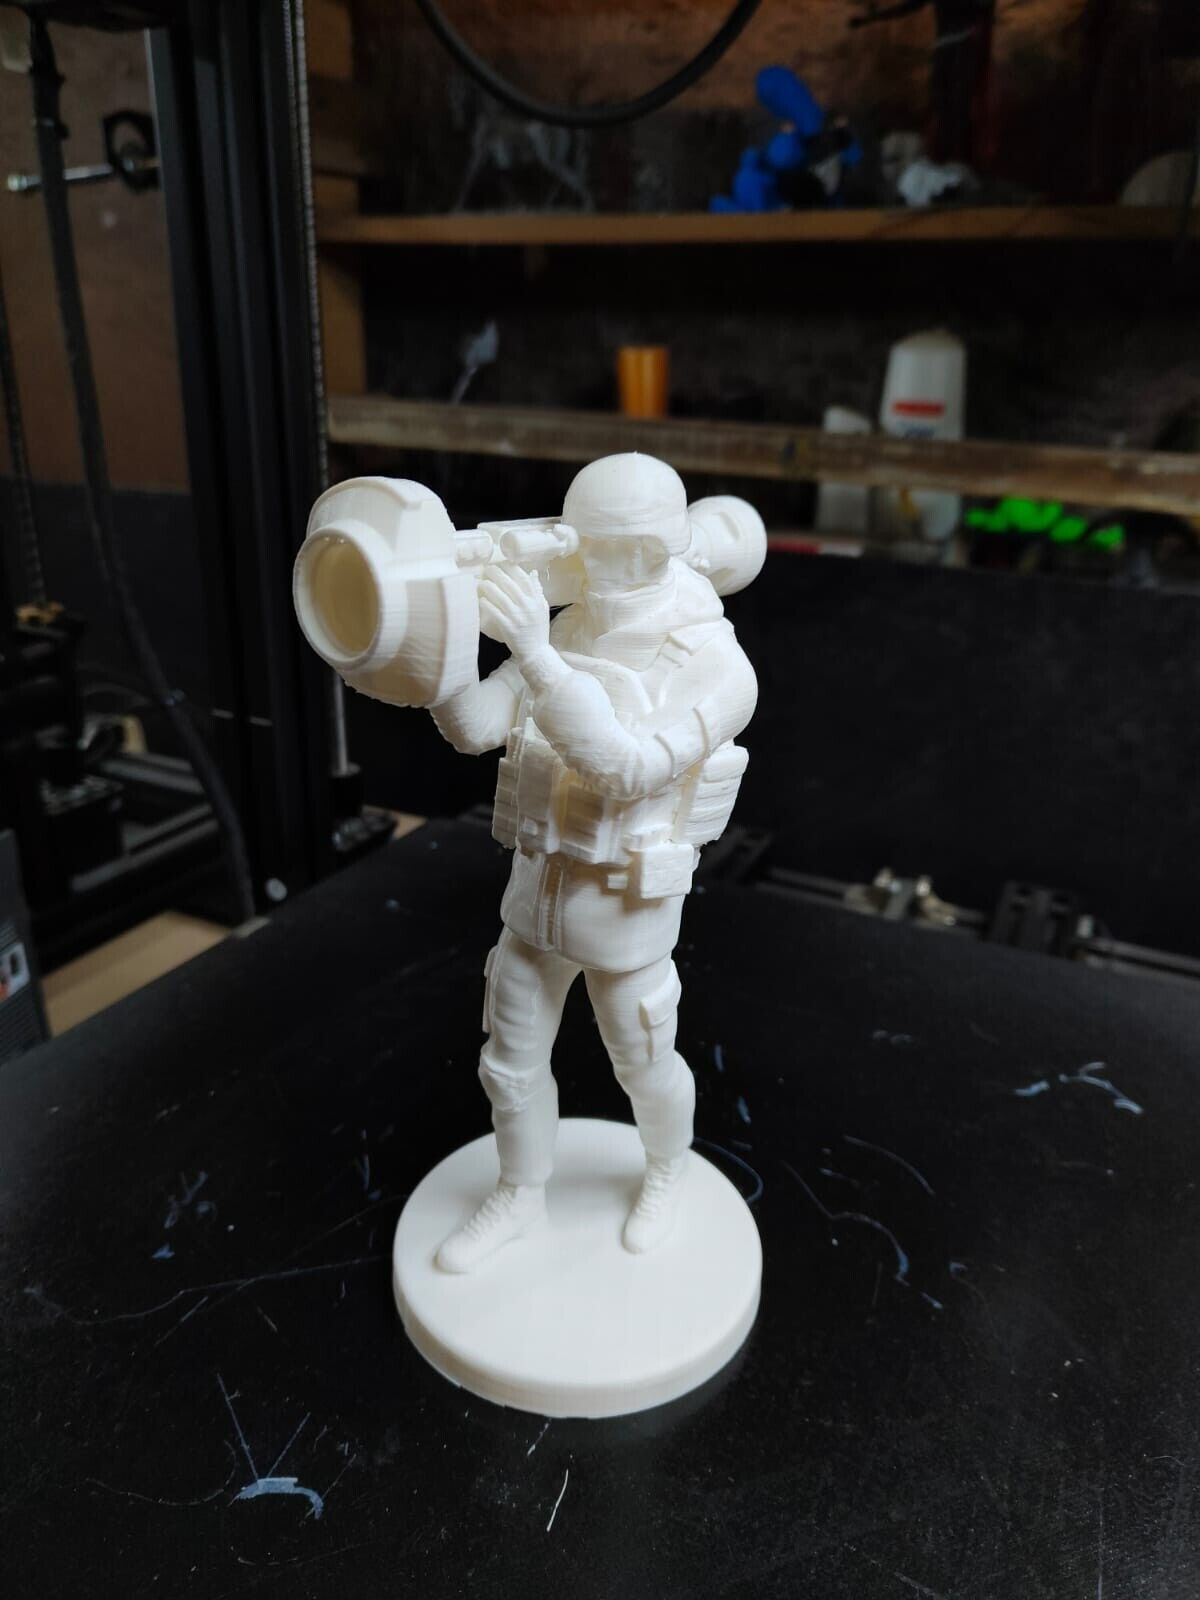 Ukrainian Soldier Mod 4 Nlaw 7.8in tall 3D Printed model kits DIY